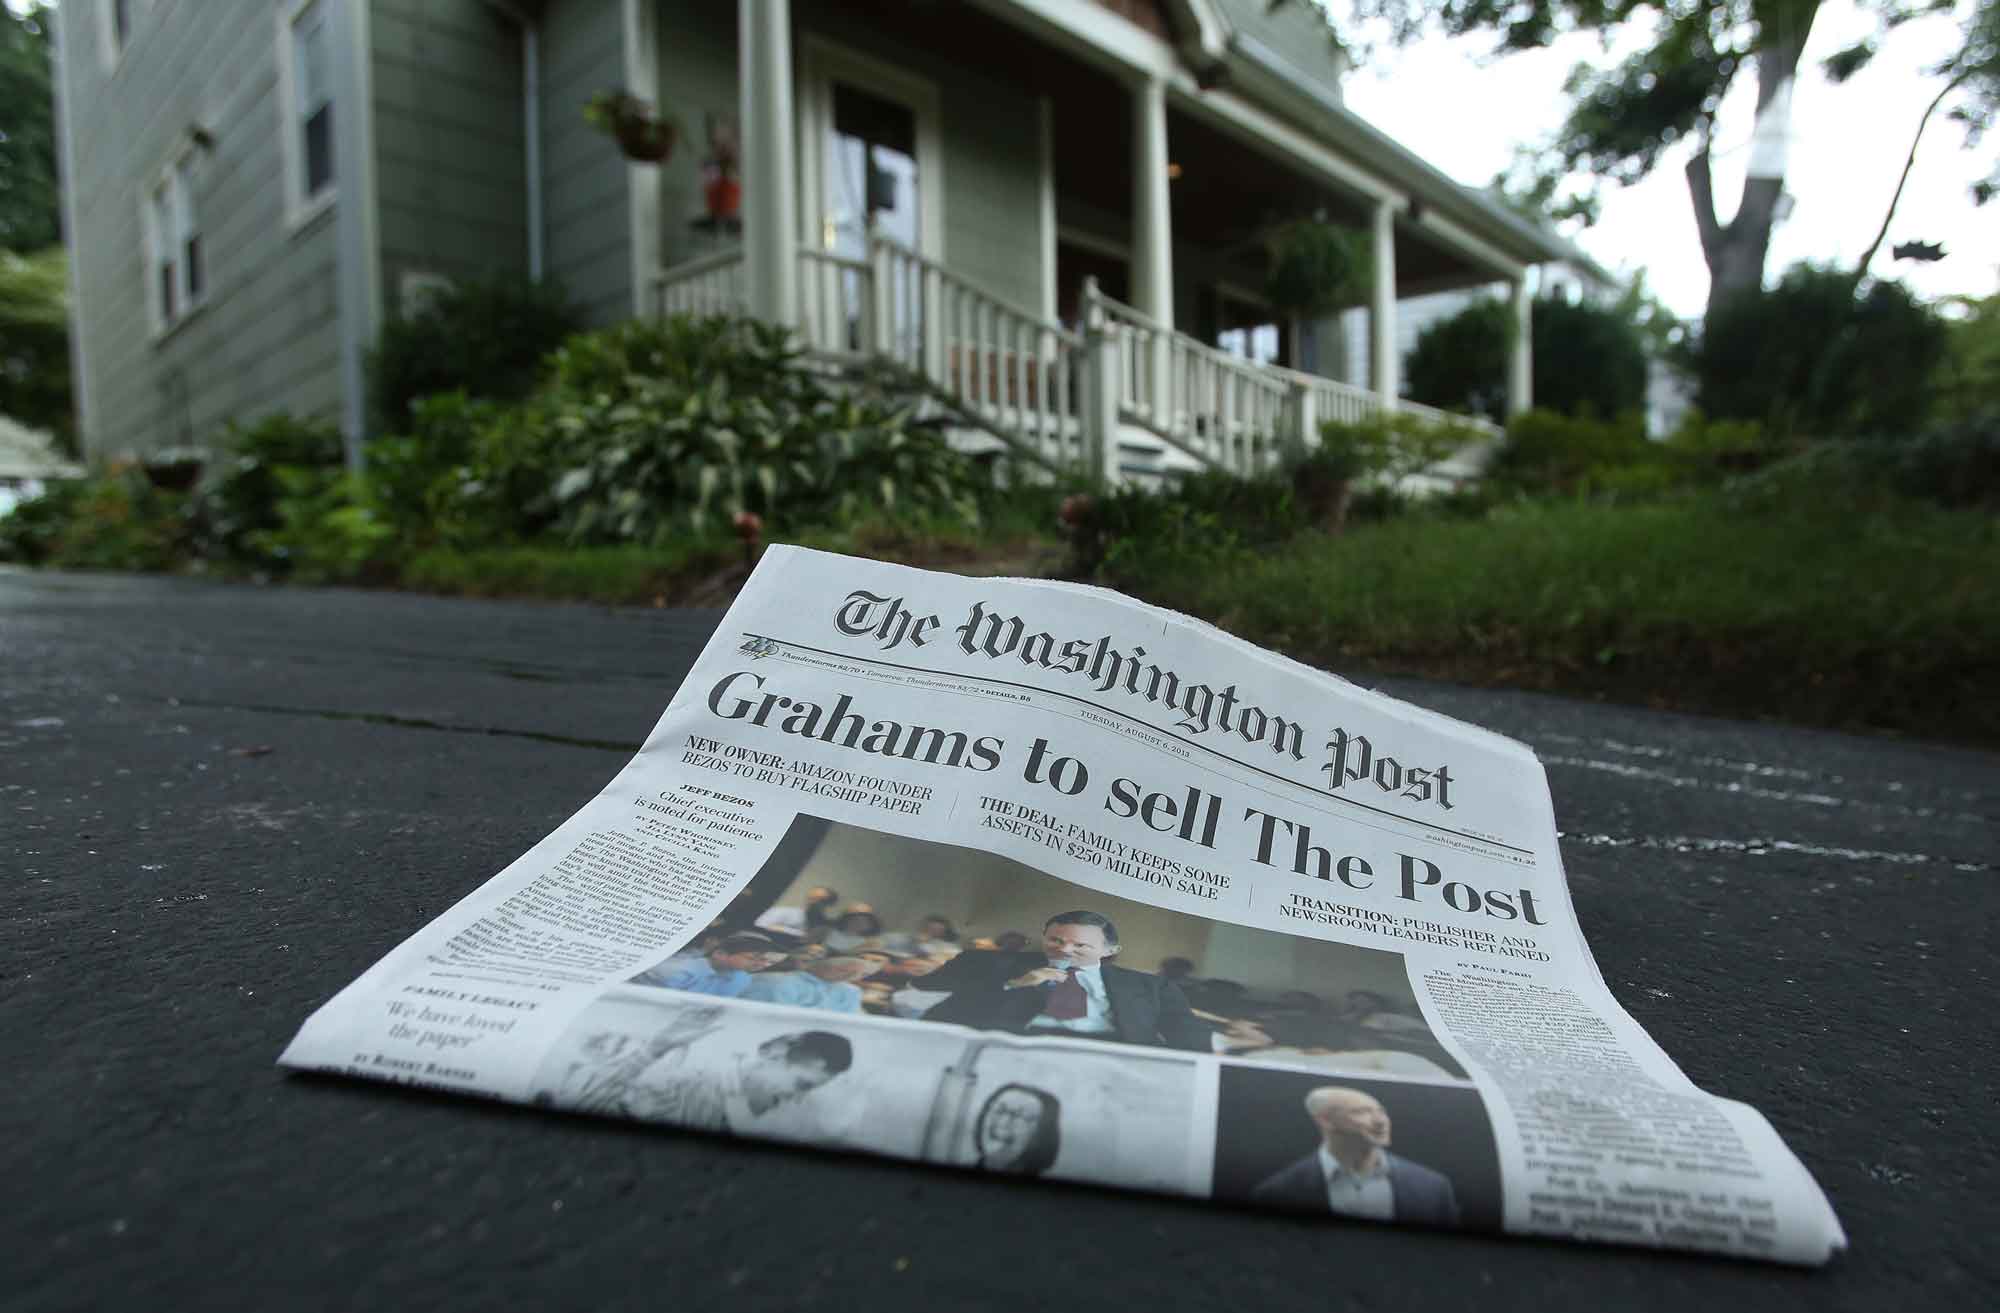 Sale of Washington Post